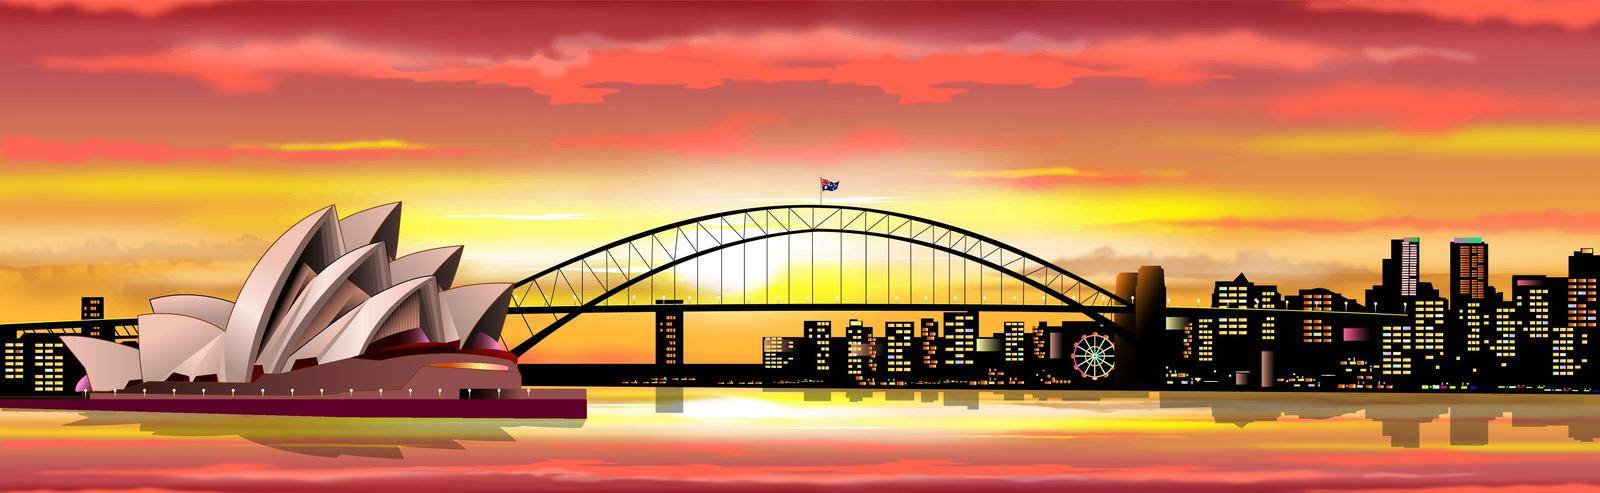 Sydney Australia cityscape by liolle